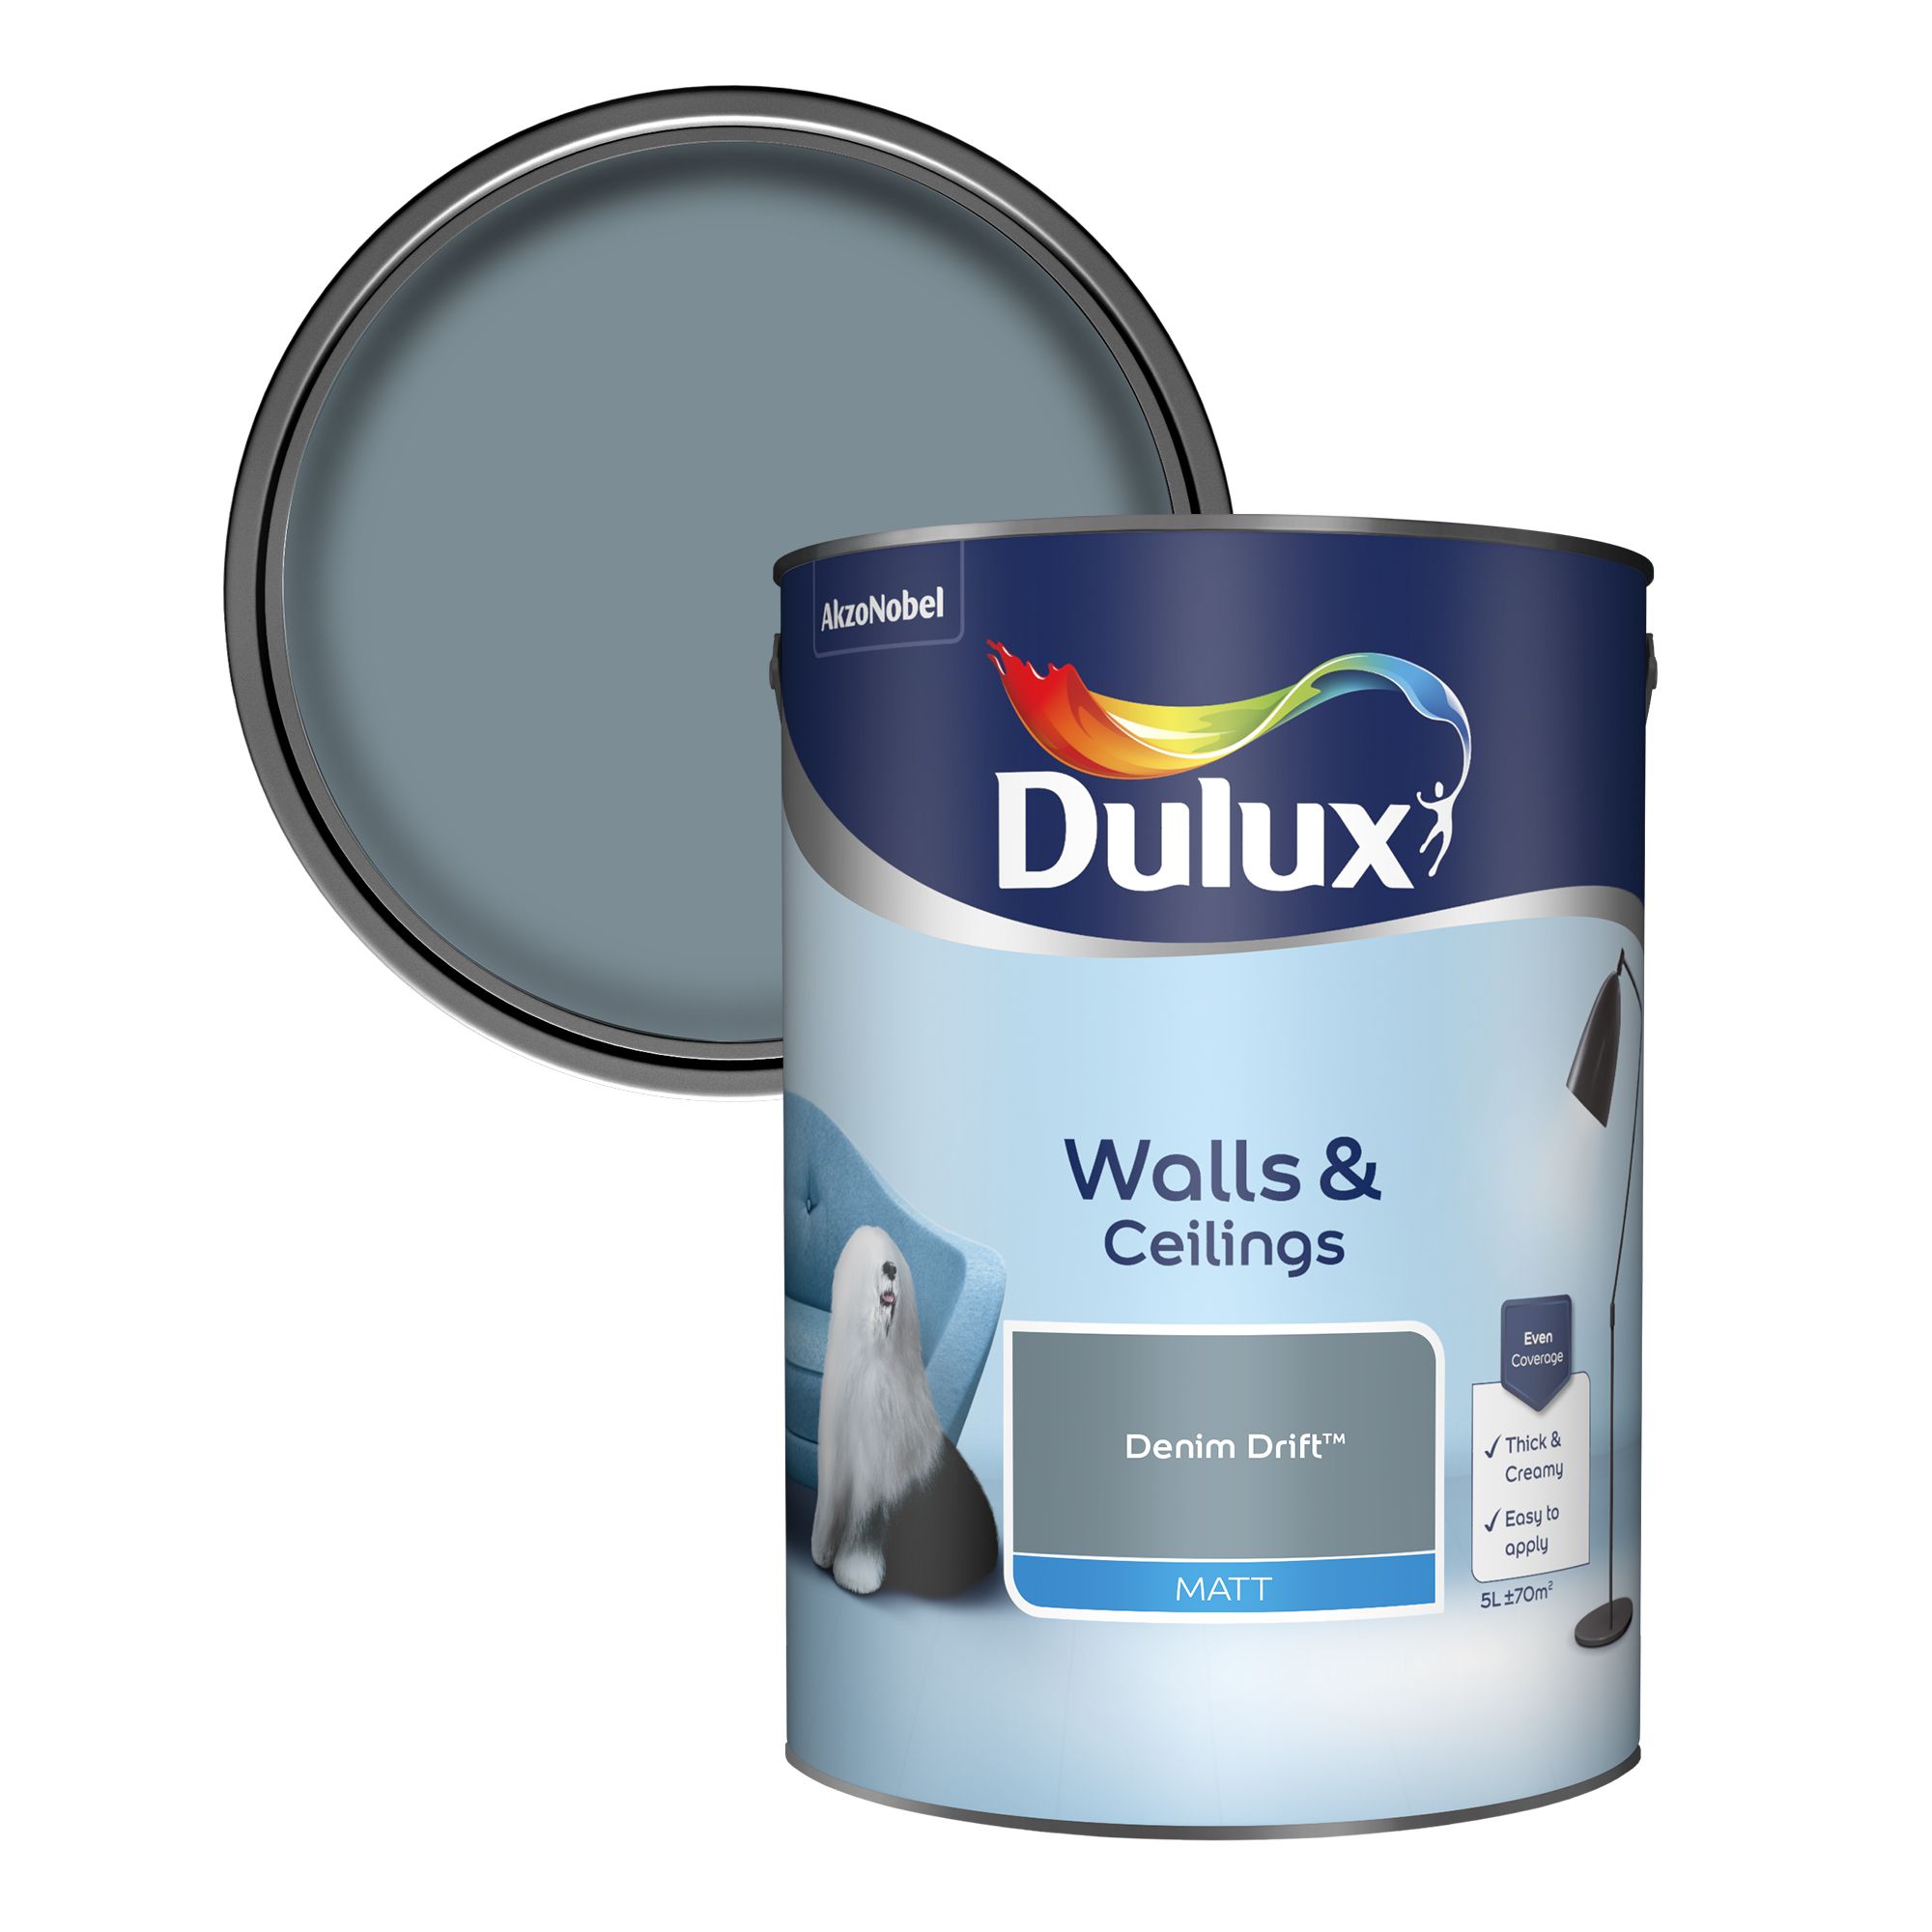 Dulux Denim Drift Matt Emulsion Paint 5l Departments Diy At B Q